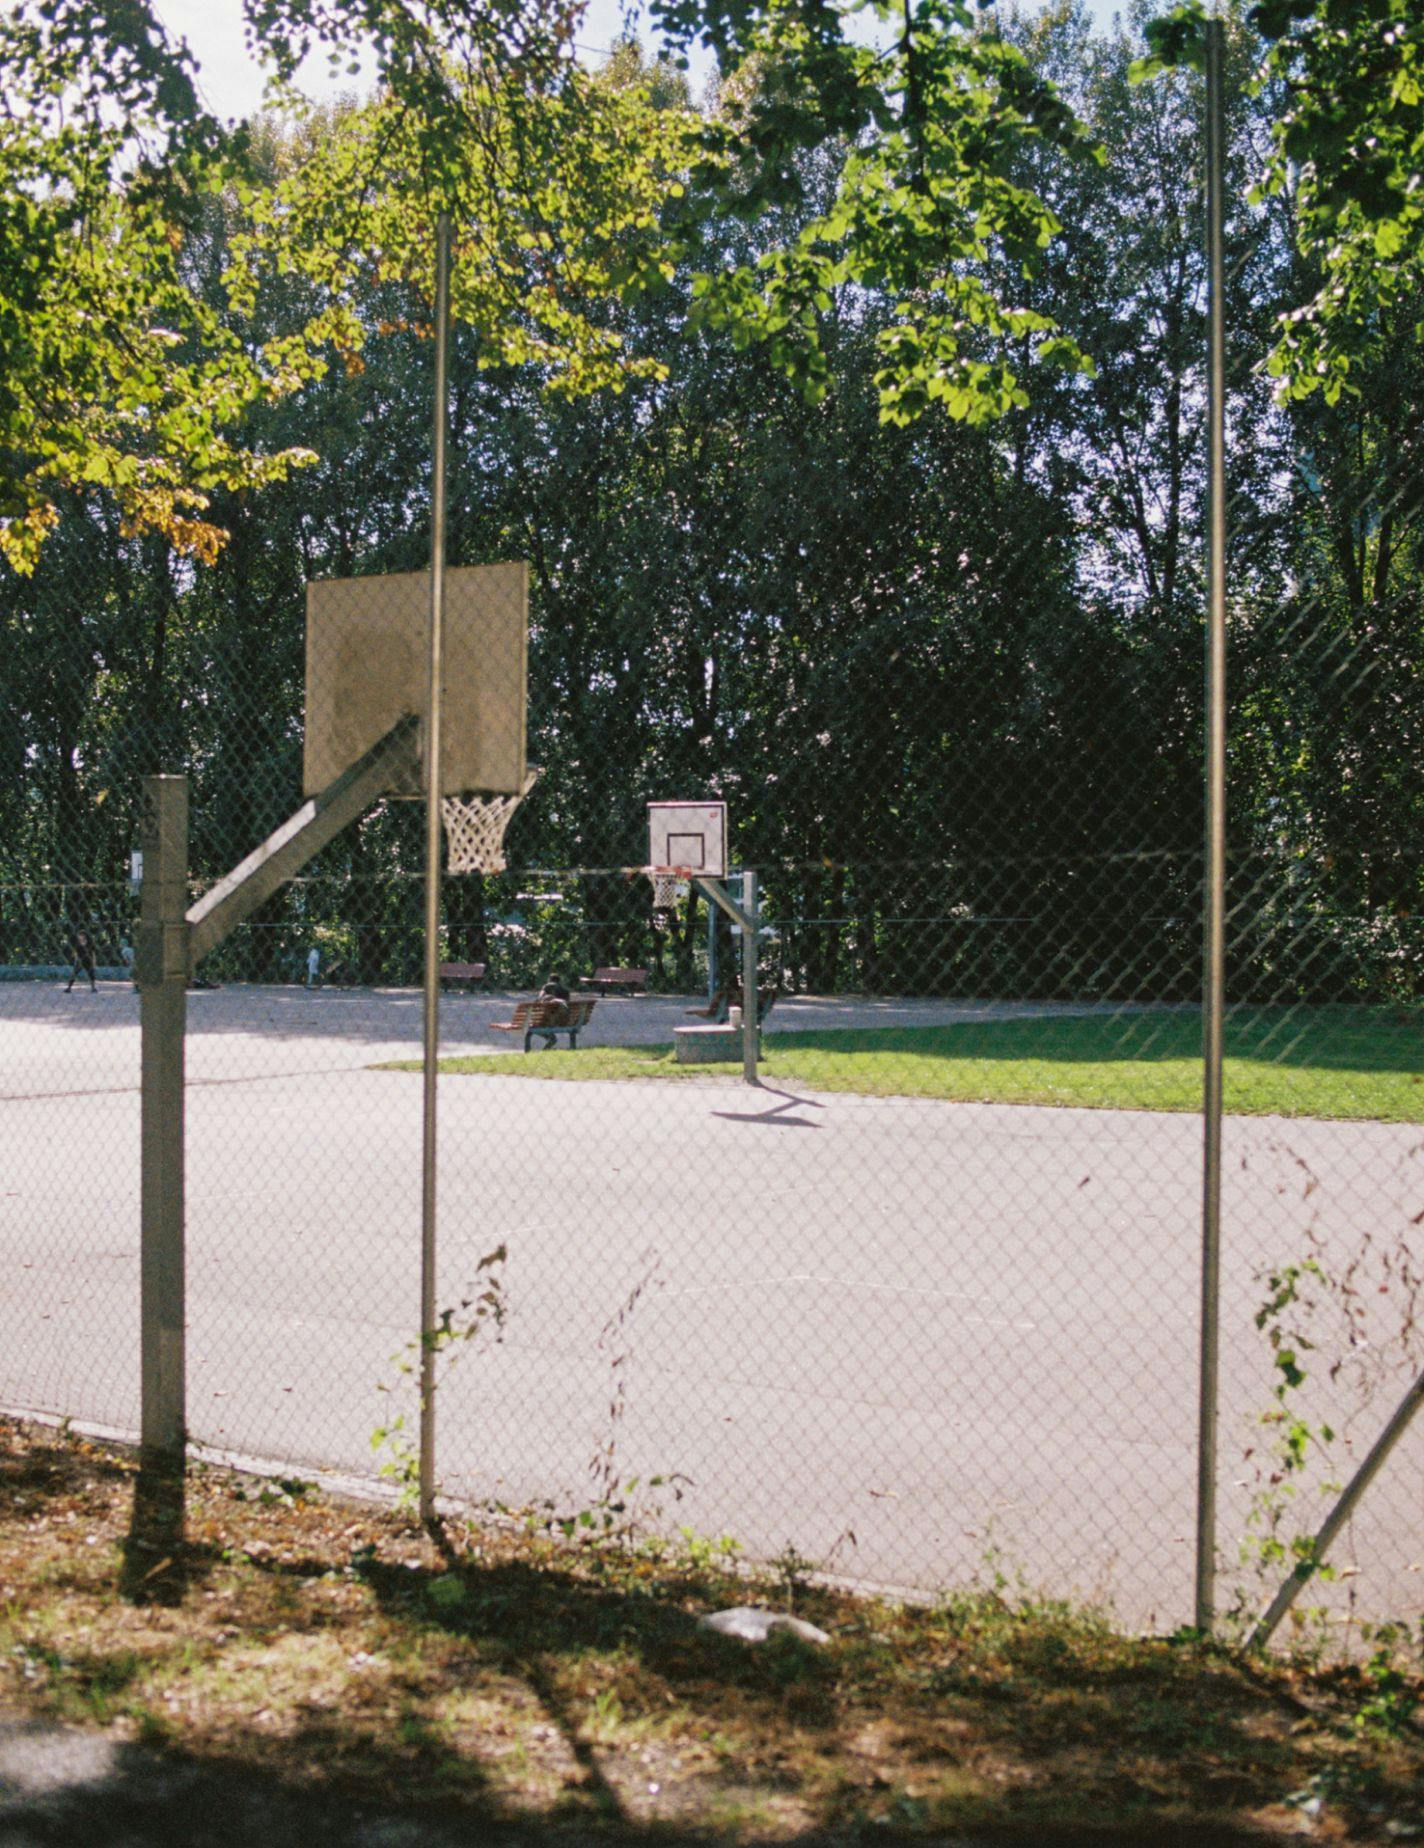 Basket court in Oslo